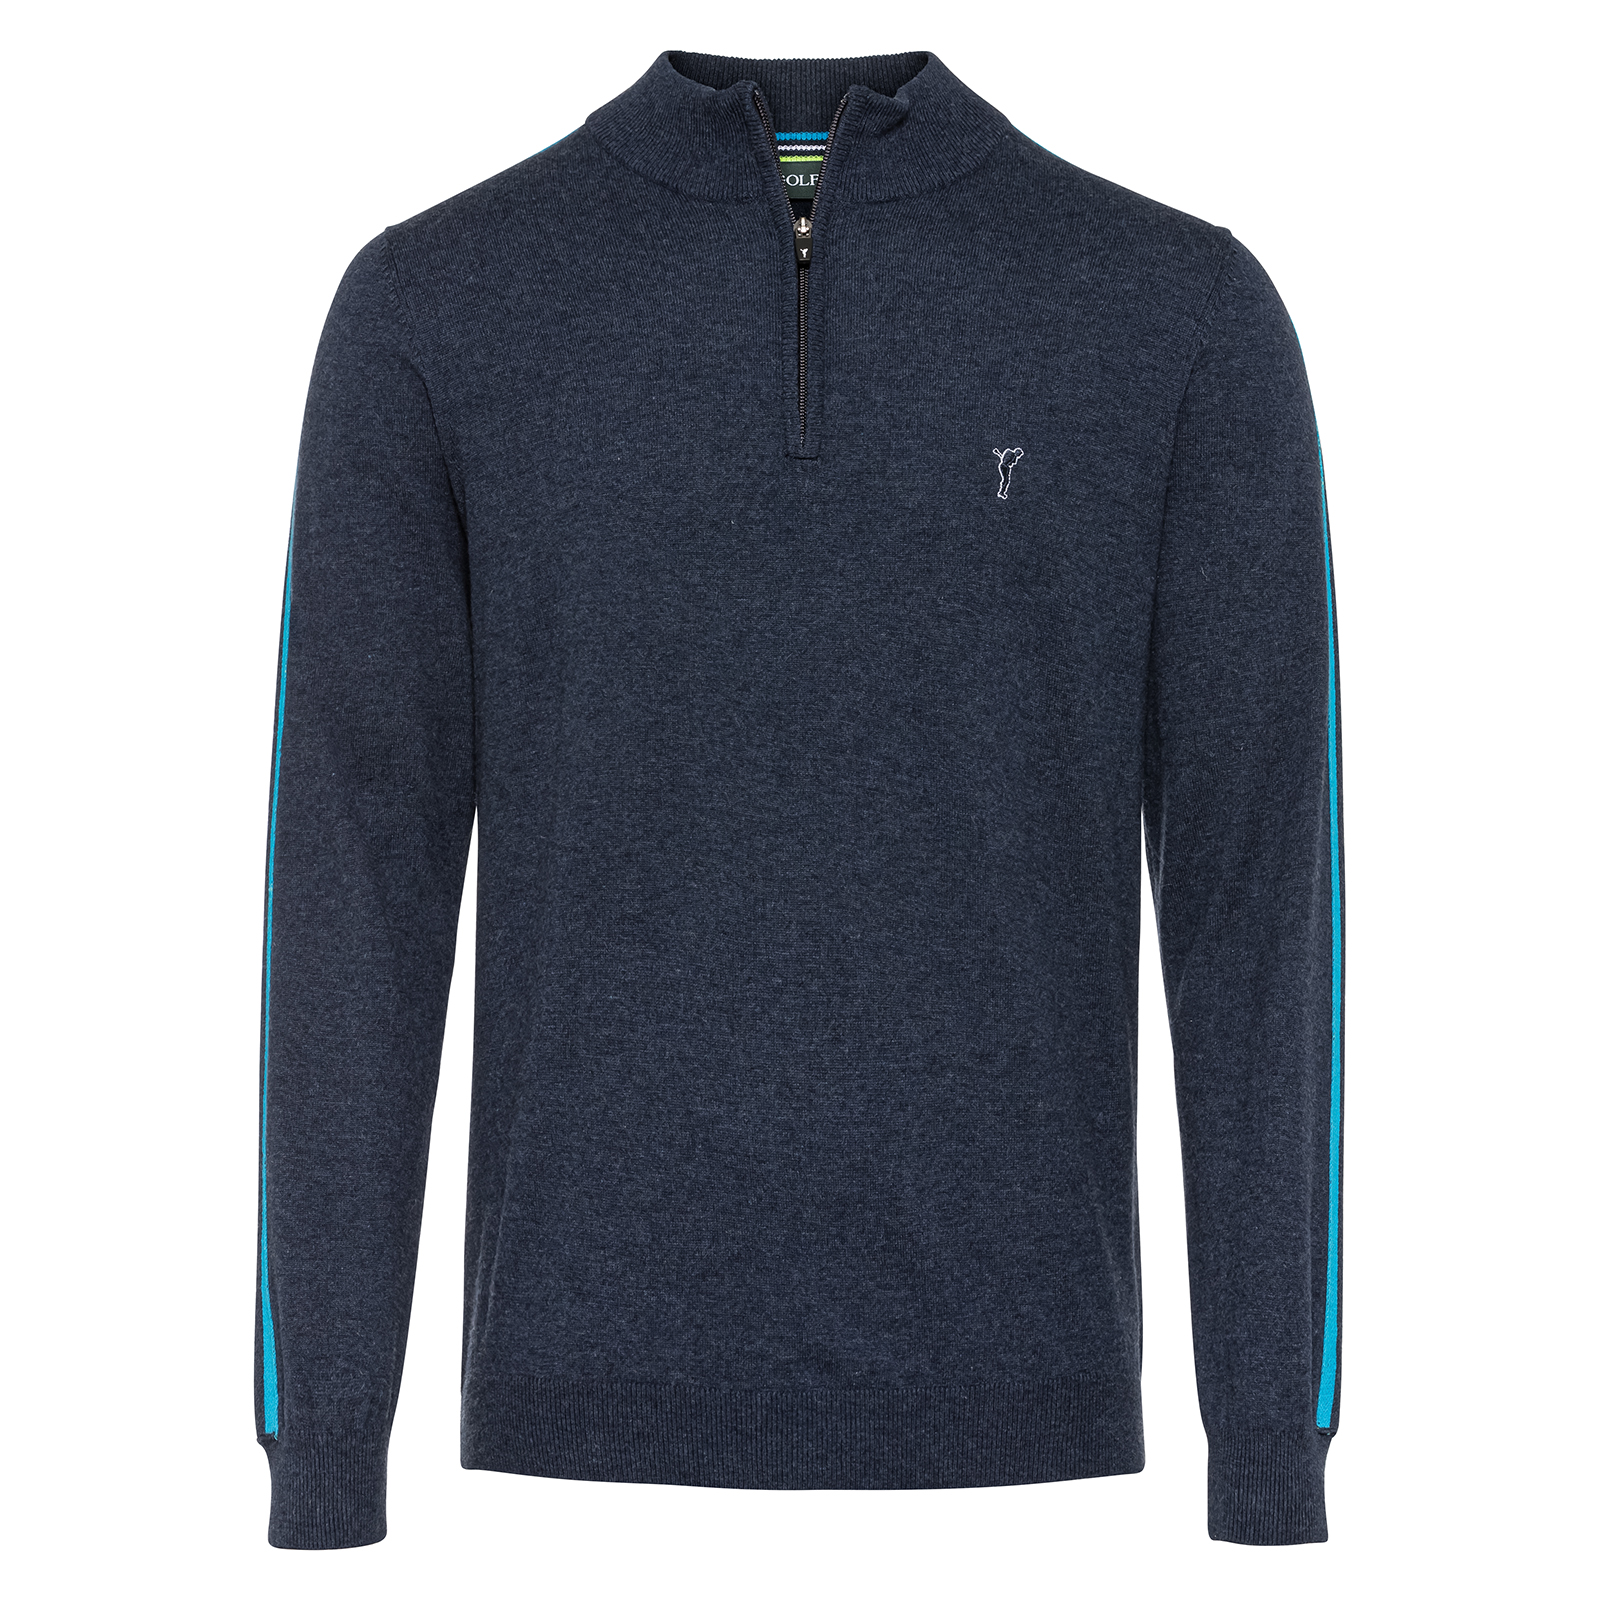 Men's stylish half-zip golf sweater with high quality merino wool